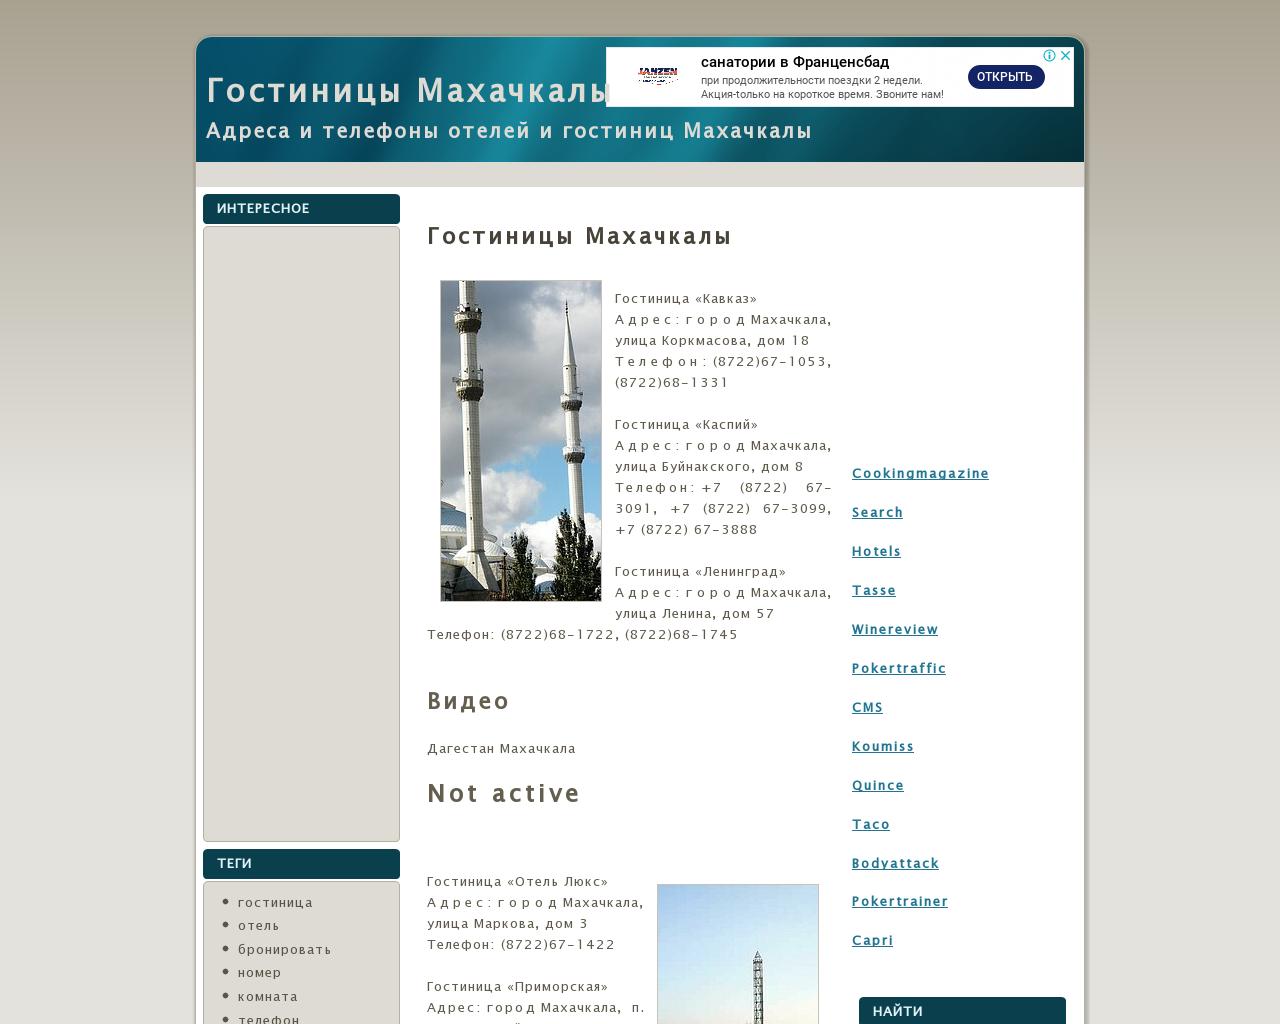 Изображение сайта makhachkalahotel.ru в разрешении 1280x1024